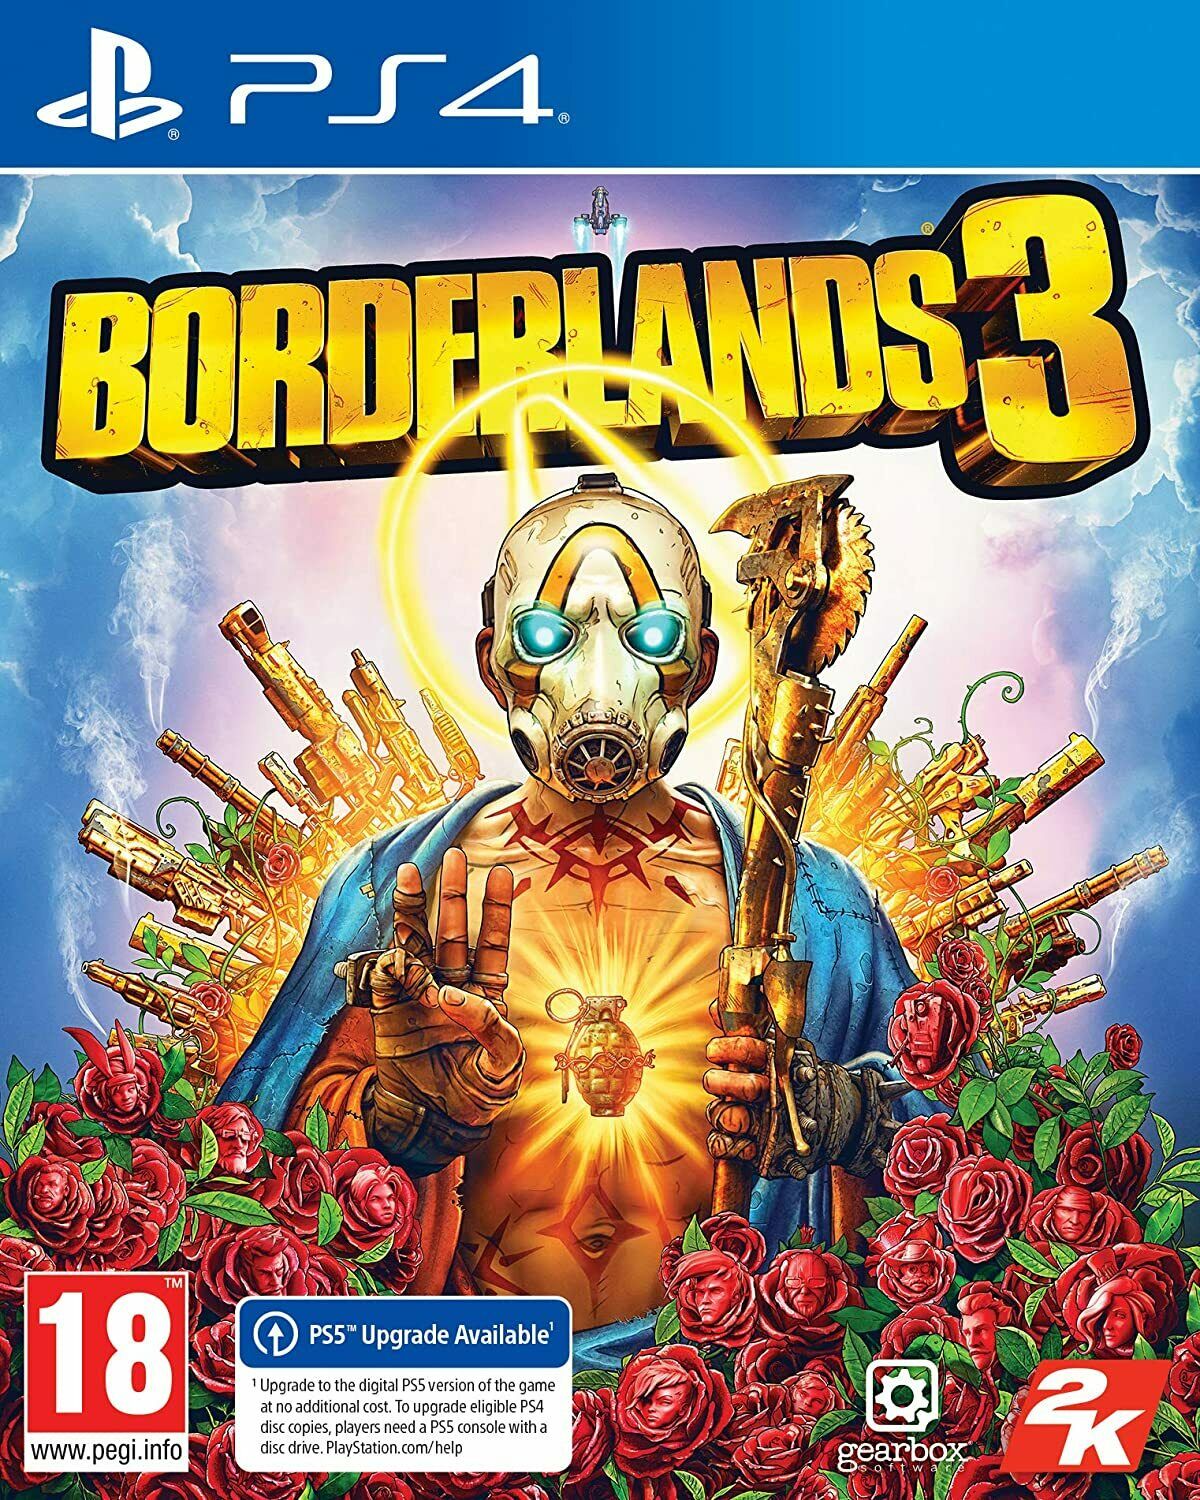 Borderlands 3 - Playstation 4 PS4 - saynama